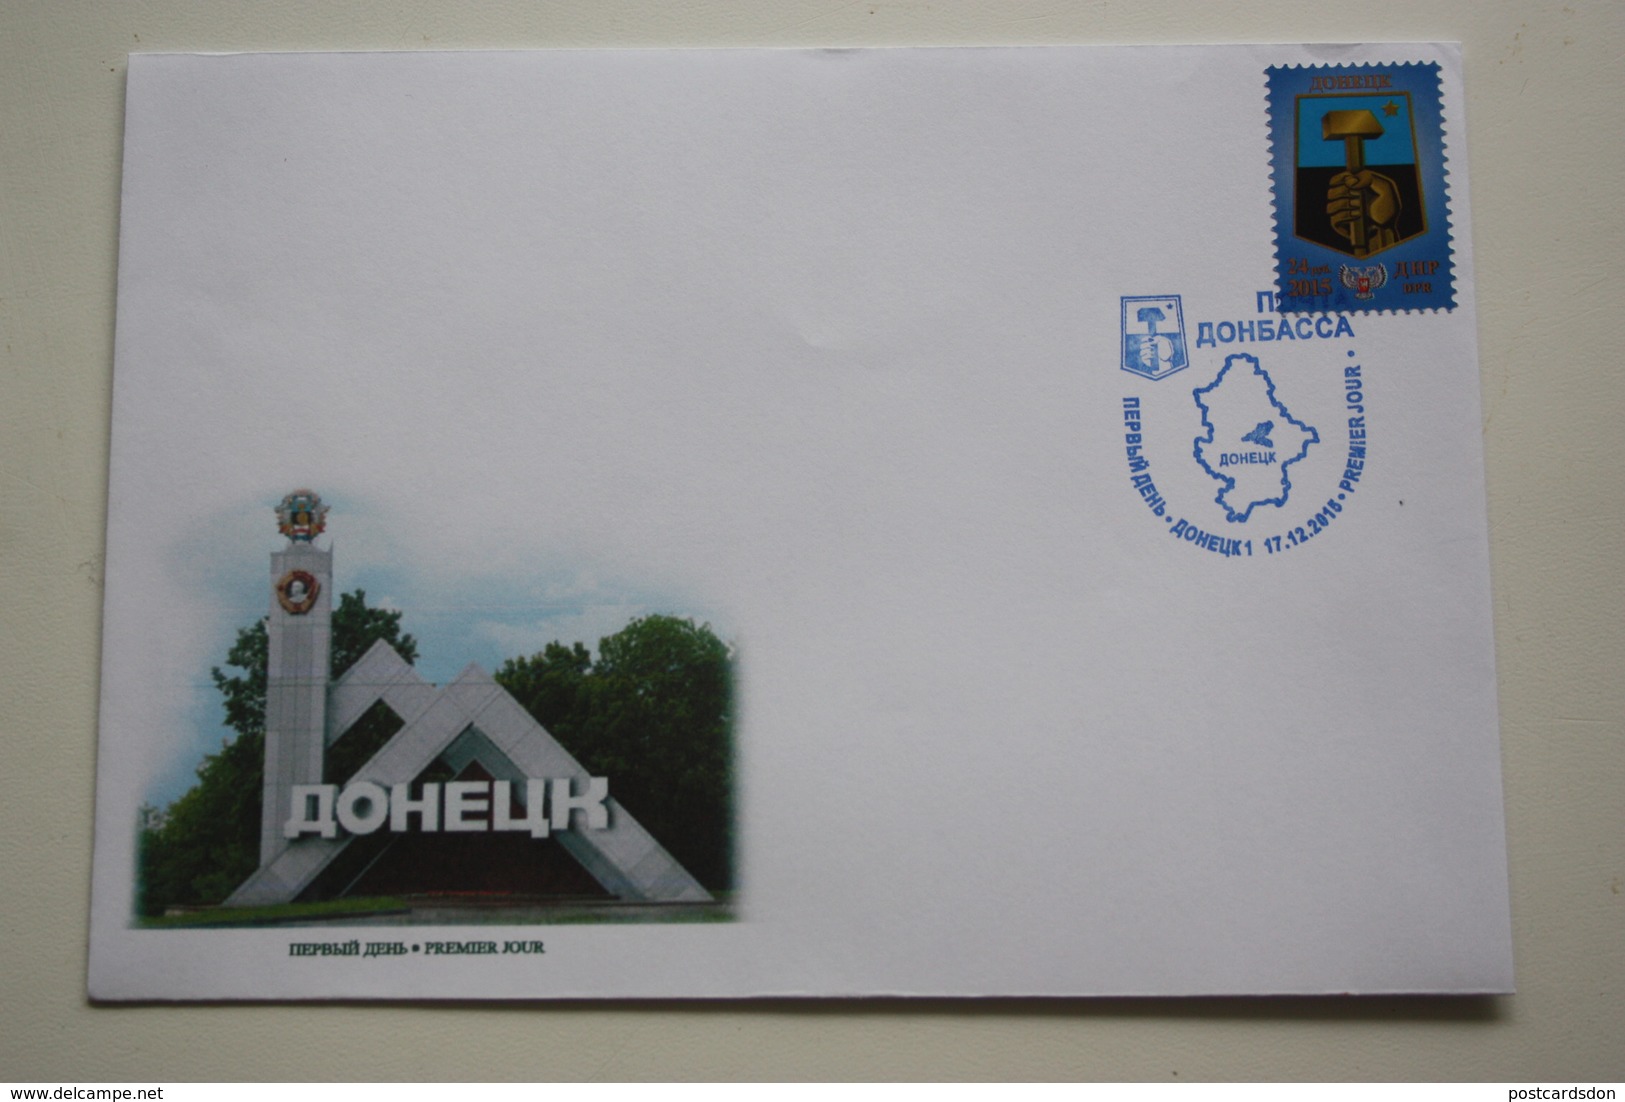 Ex Ukraine. Donetsk (DNR). ENVELOPPE PREMIER JOUR - Donetsk Miner Emblem Stamp 2015 - Ukraine